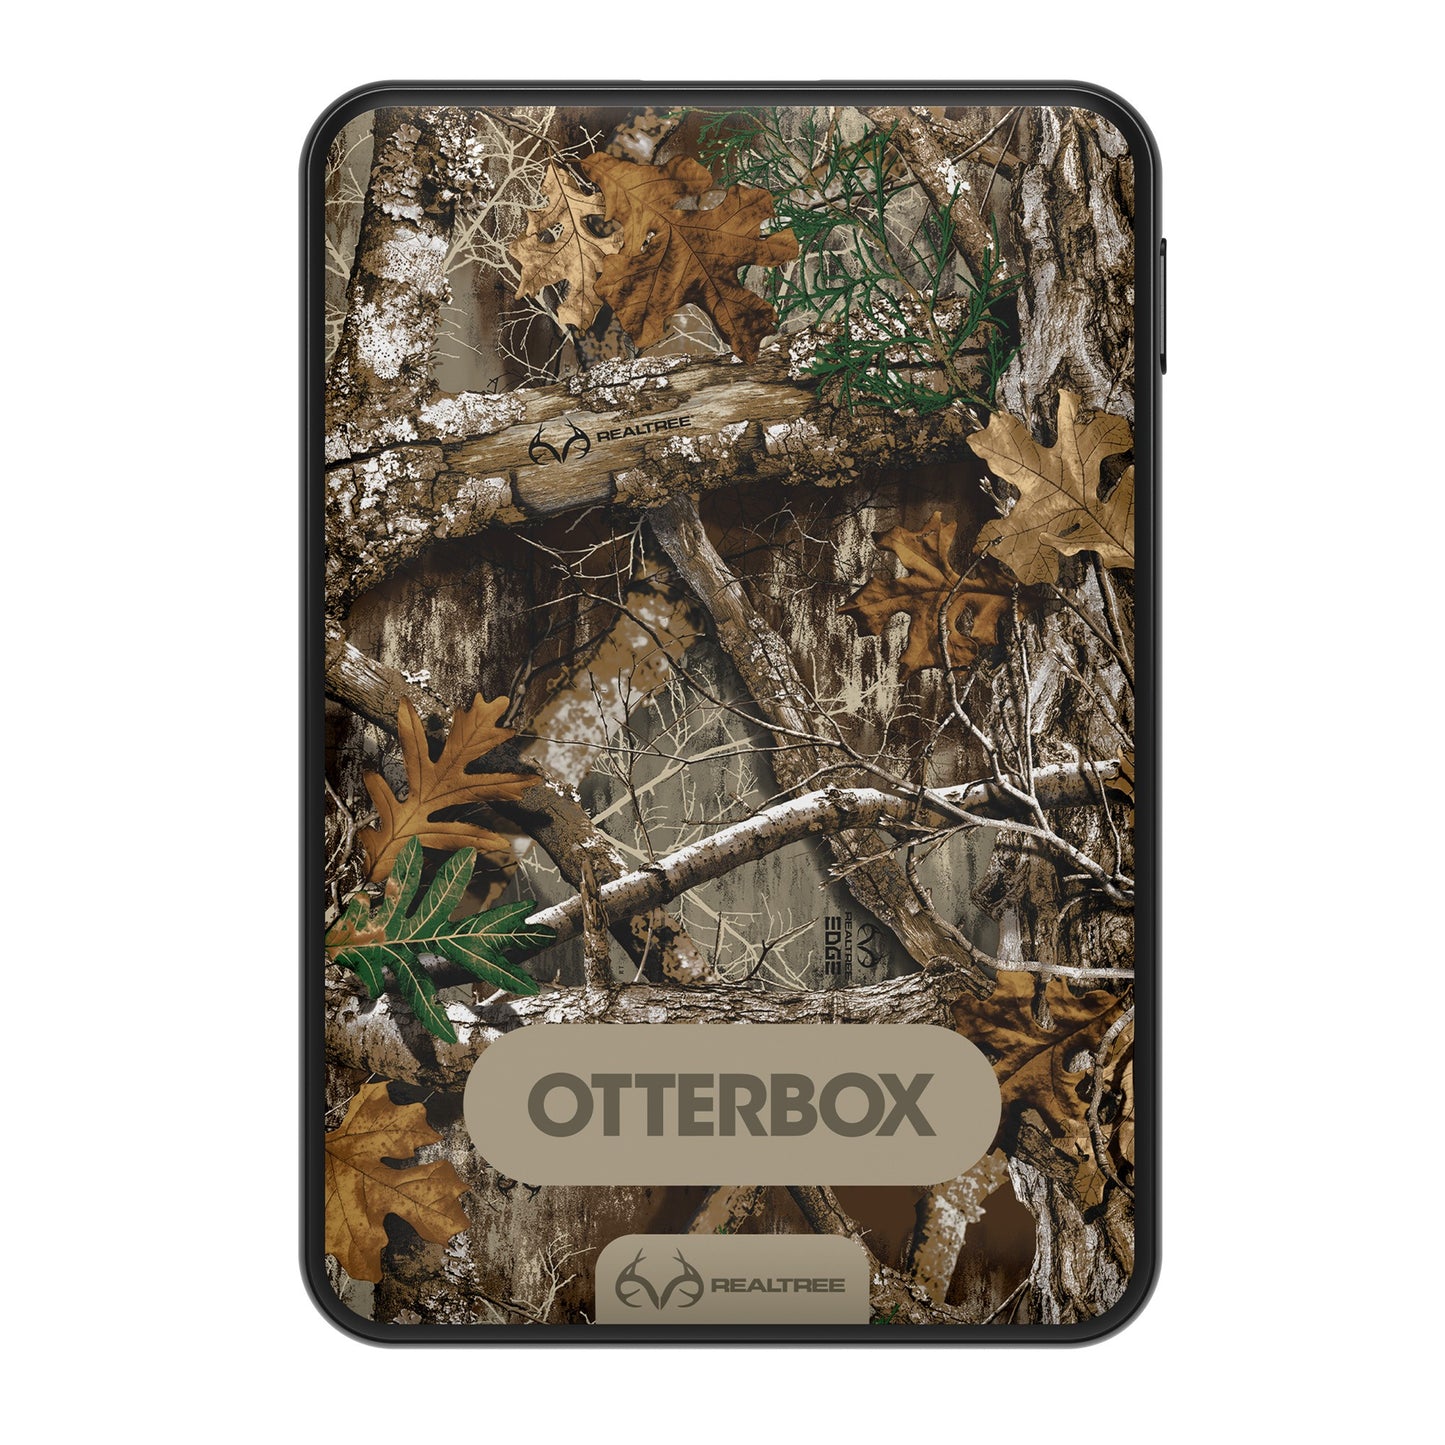 Otterbox 5,000 mAh 3-in-1 Portable Power Bank Mobile Charging Kit - Black (Realtree Edge) - 15-12098